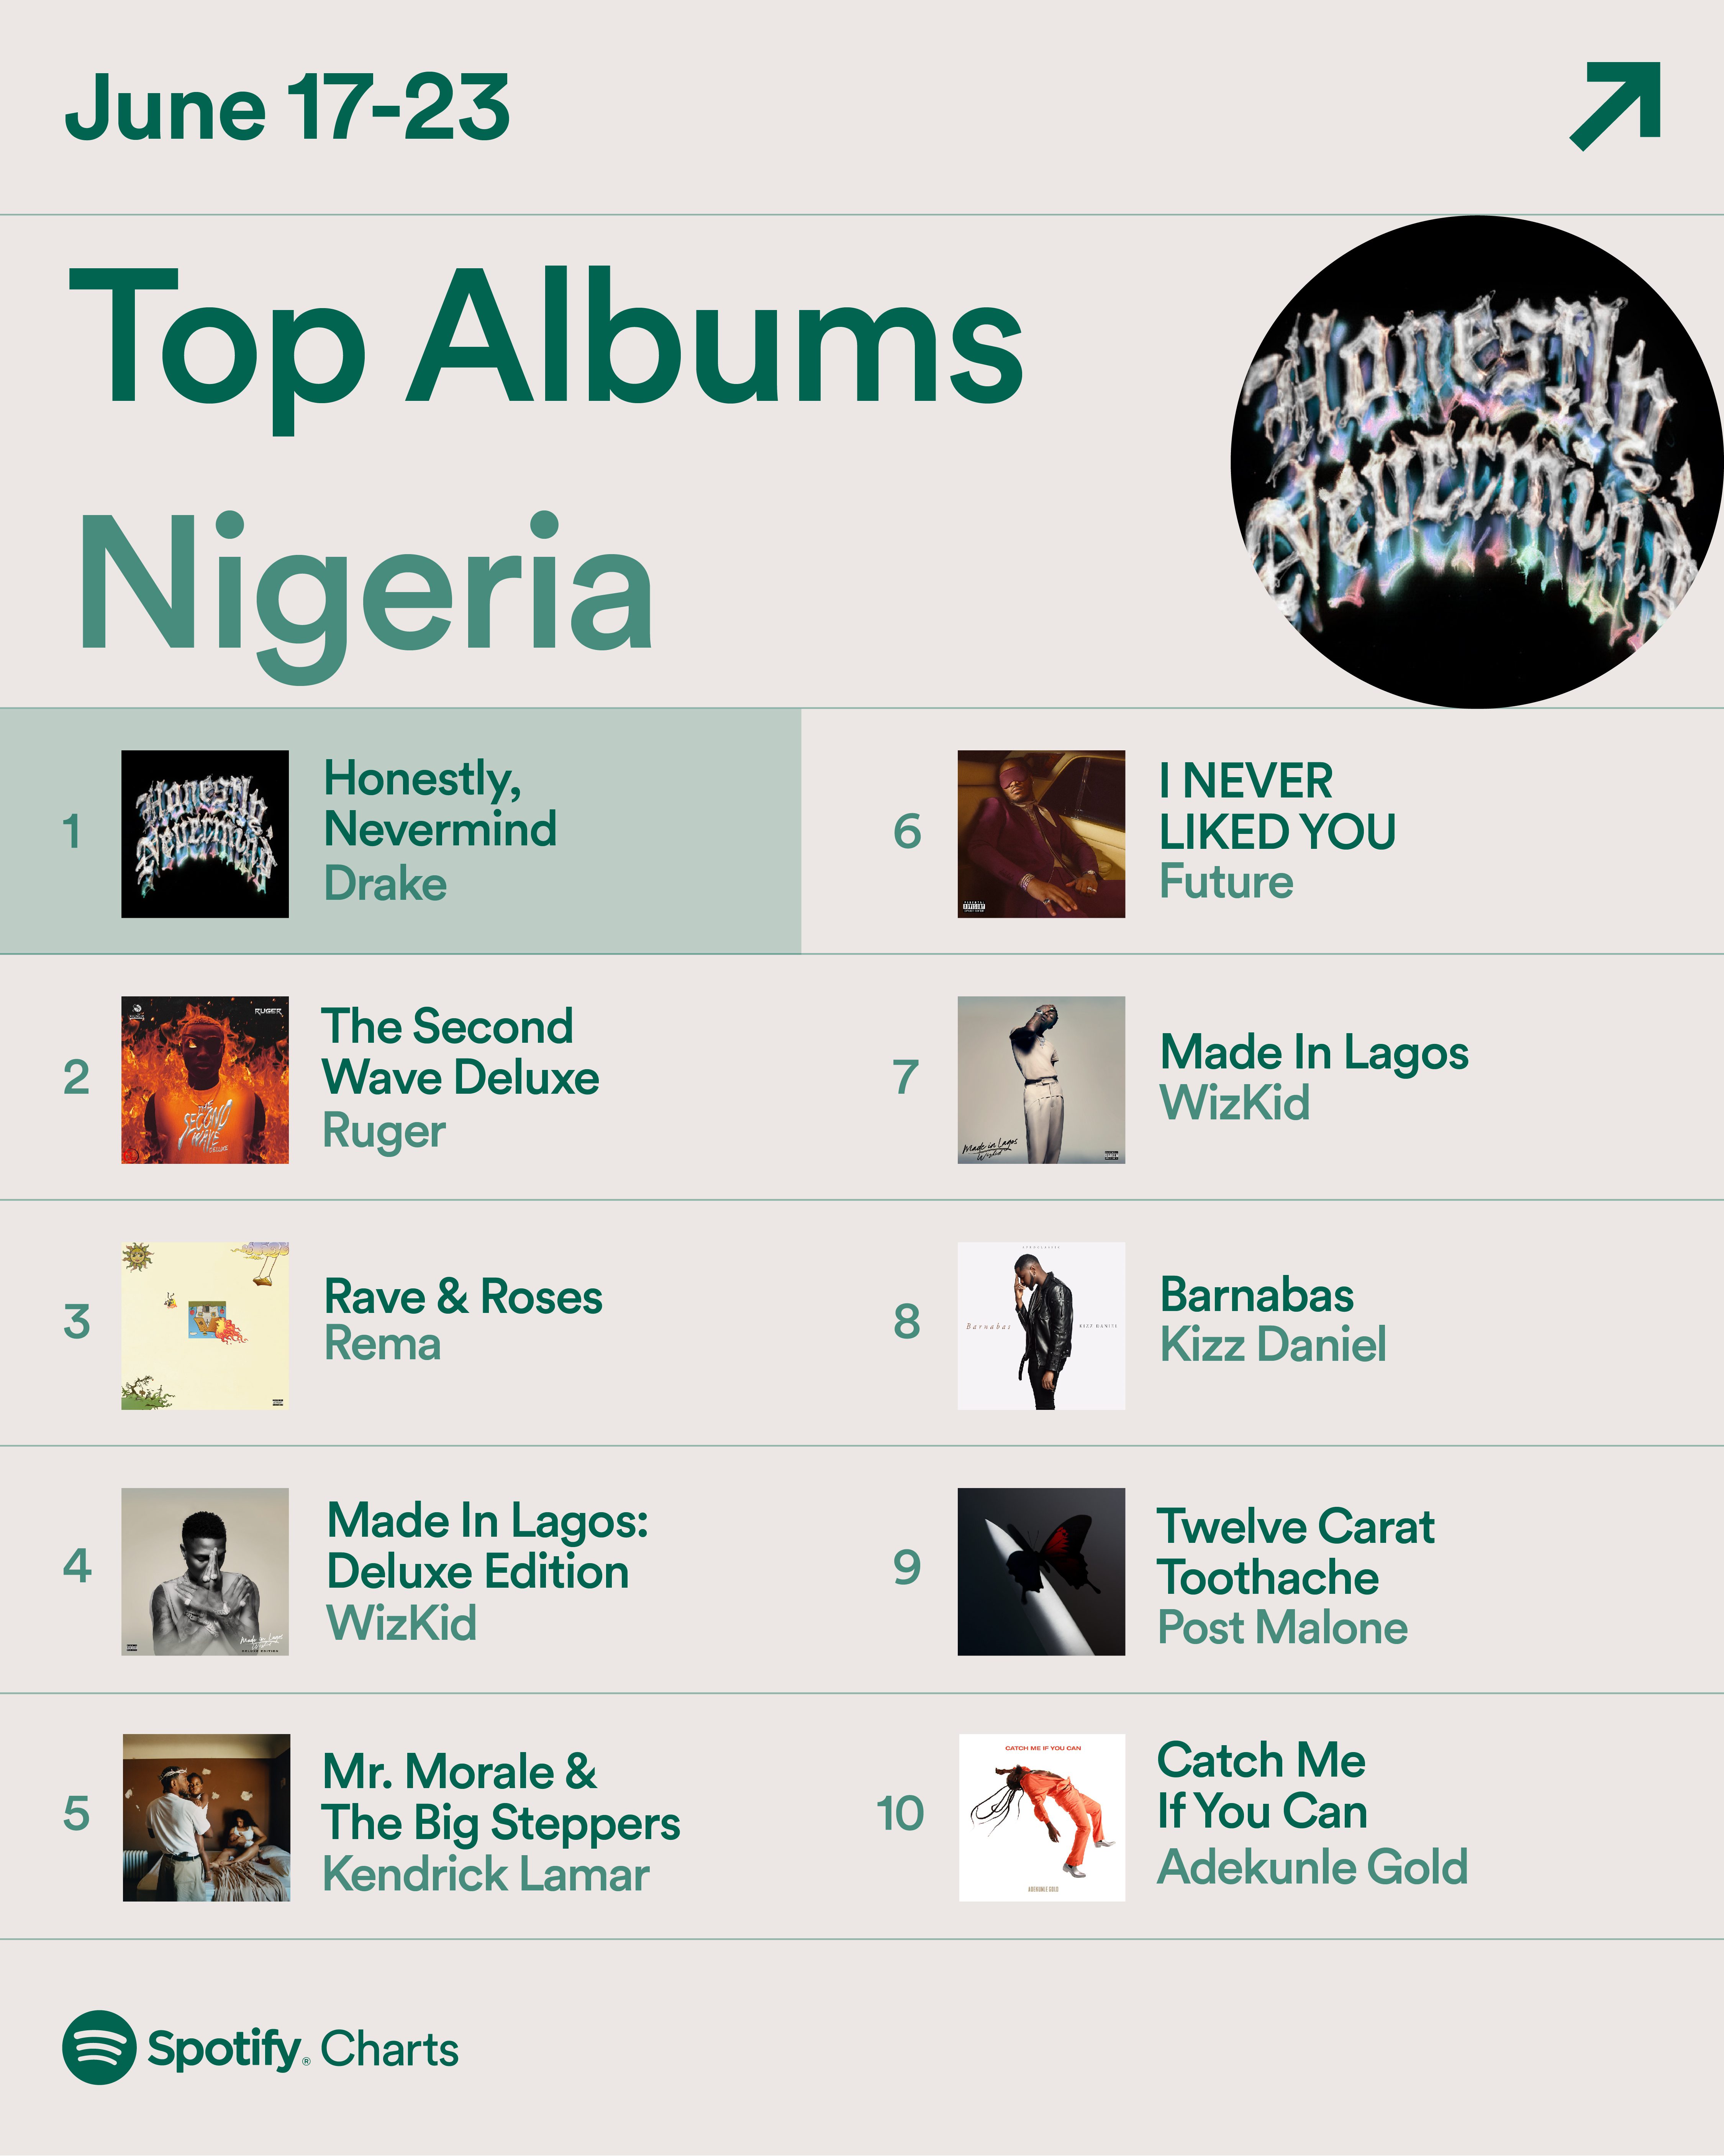 Top Album Nigeria on Spotify this week